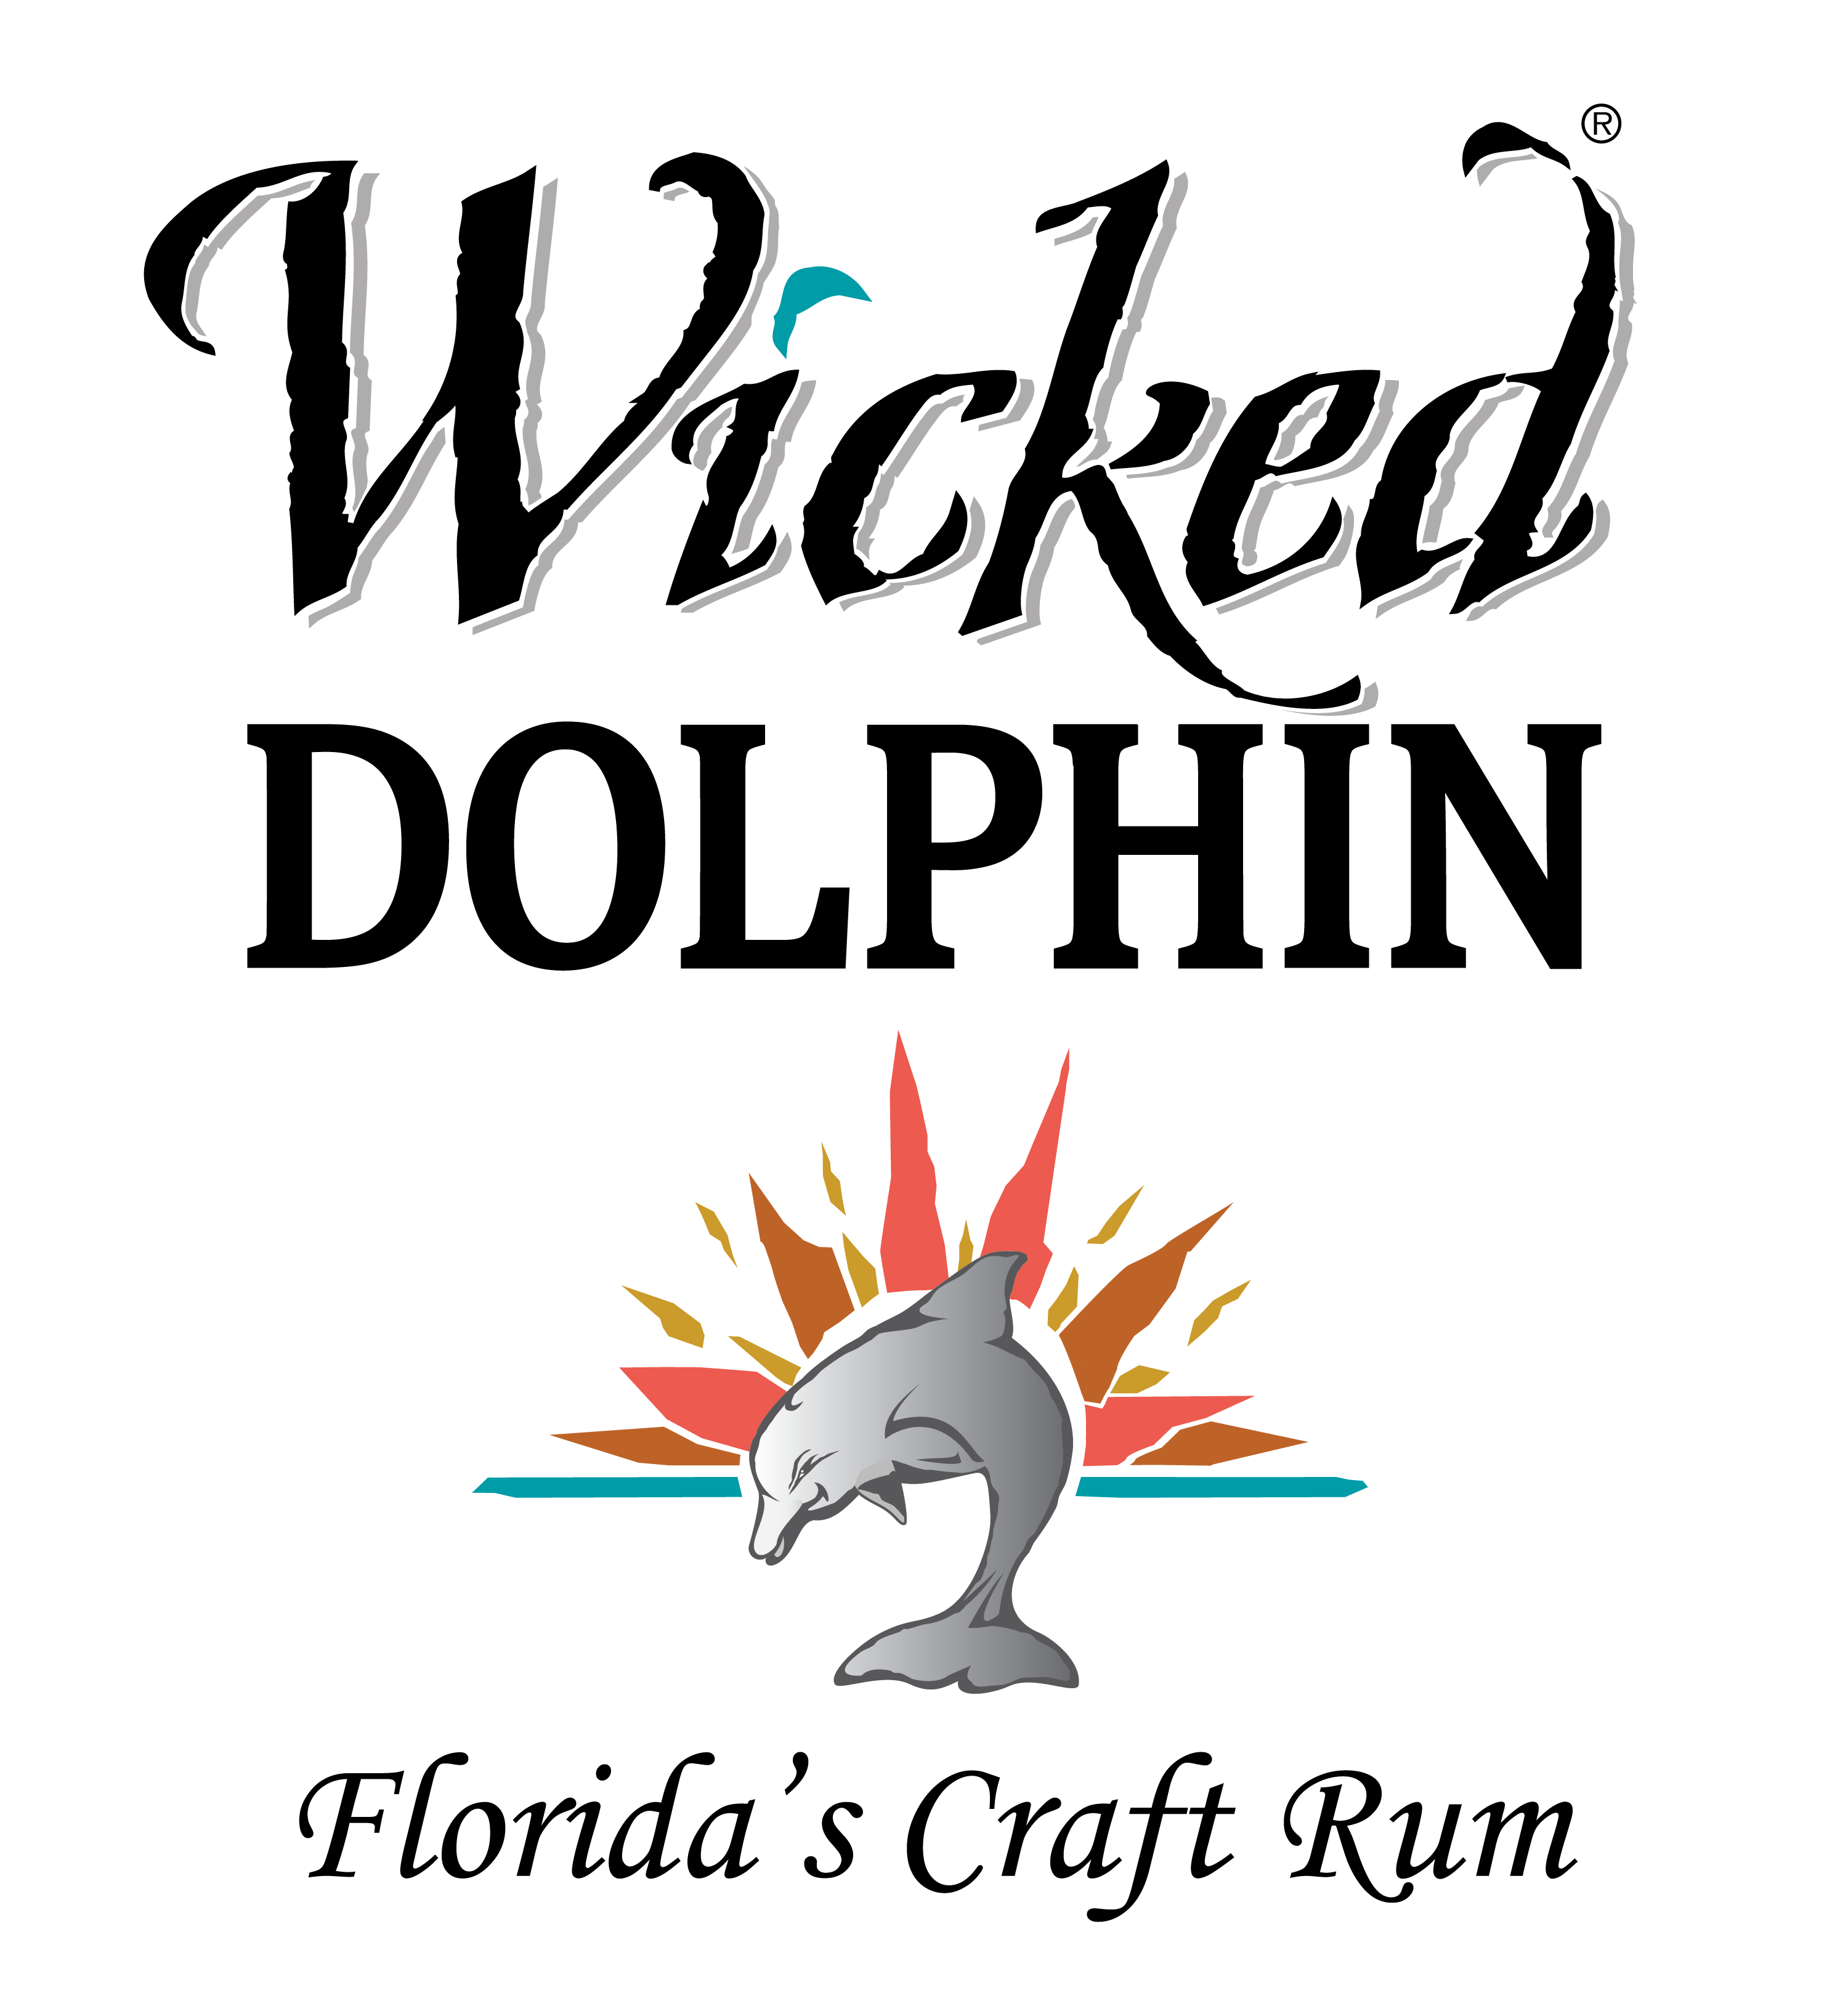 Wicked Dolphin Distillery